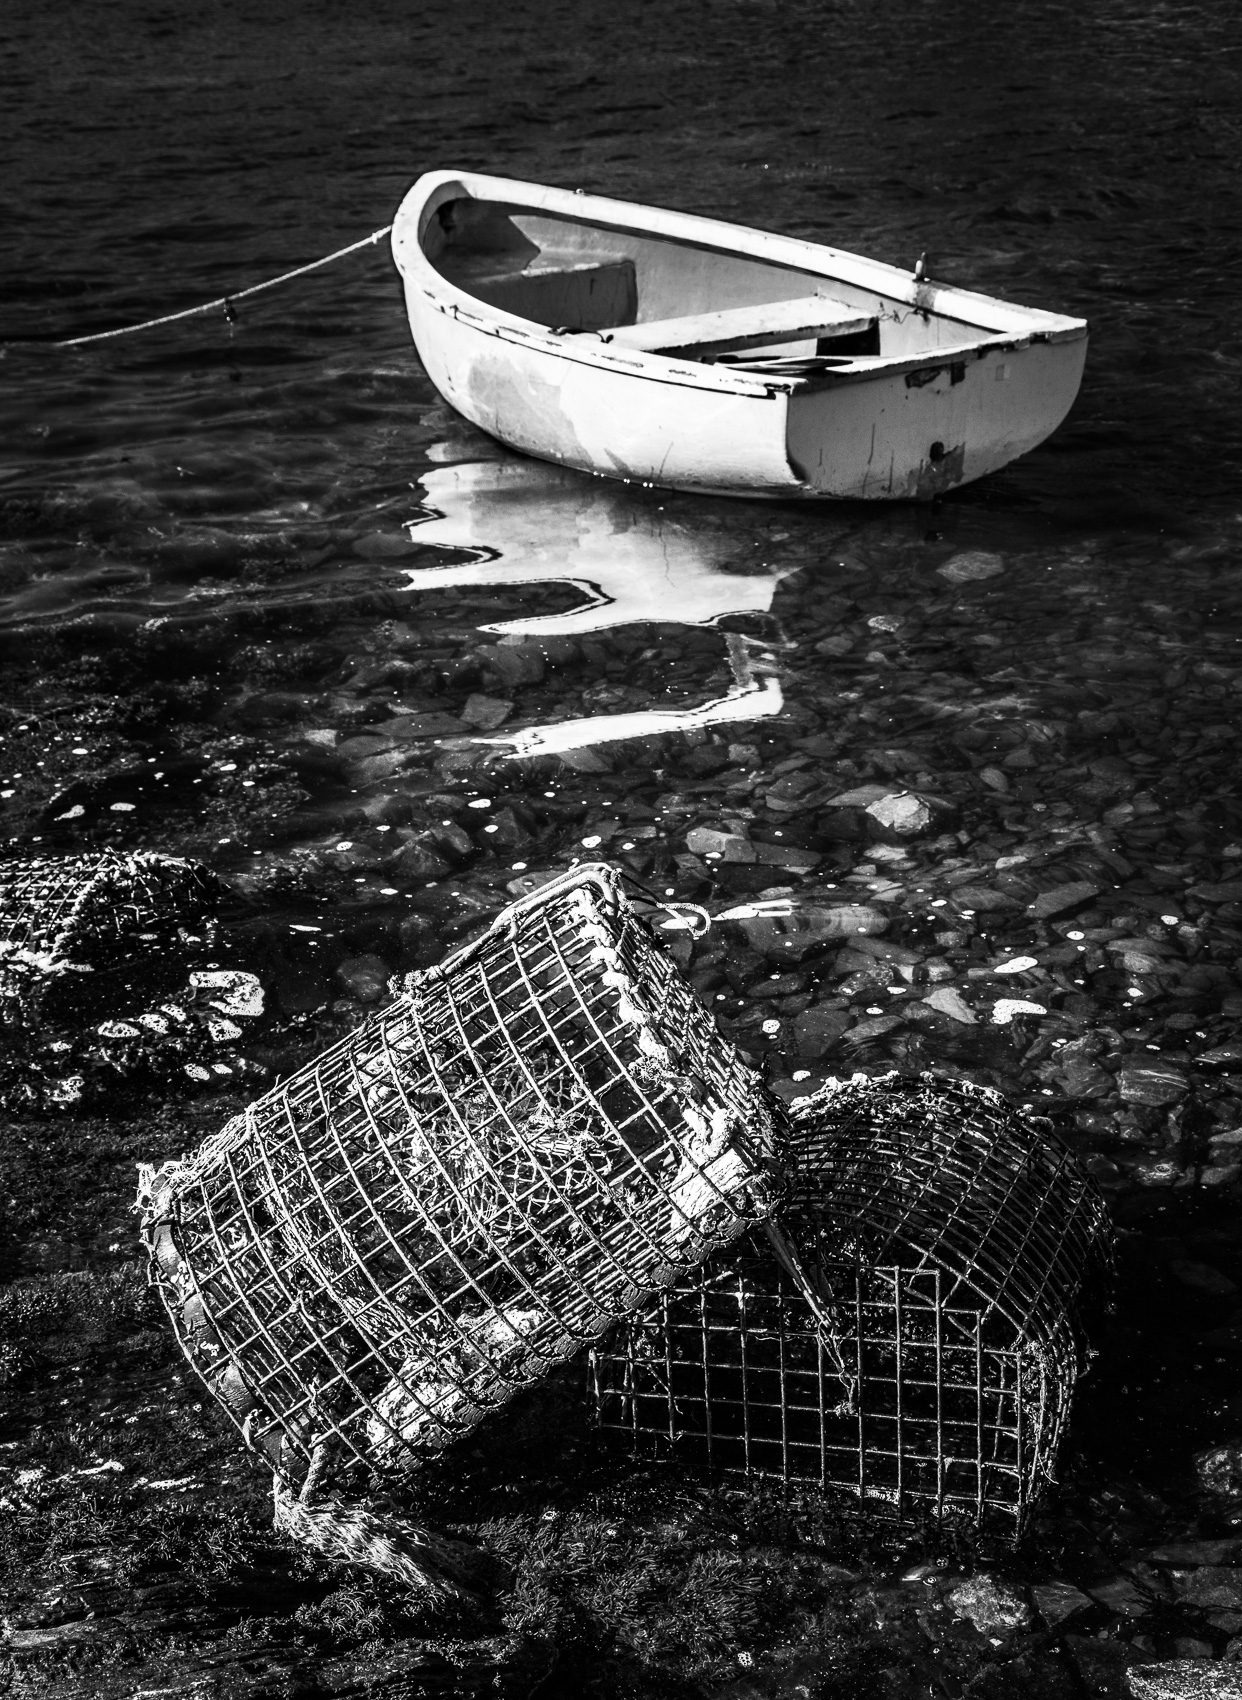 Moored boat and lobster pots, Connemara, Ireland.